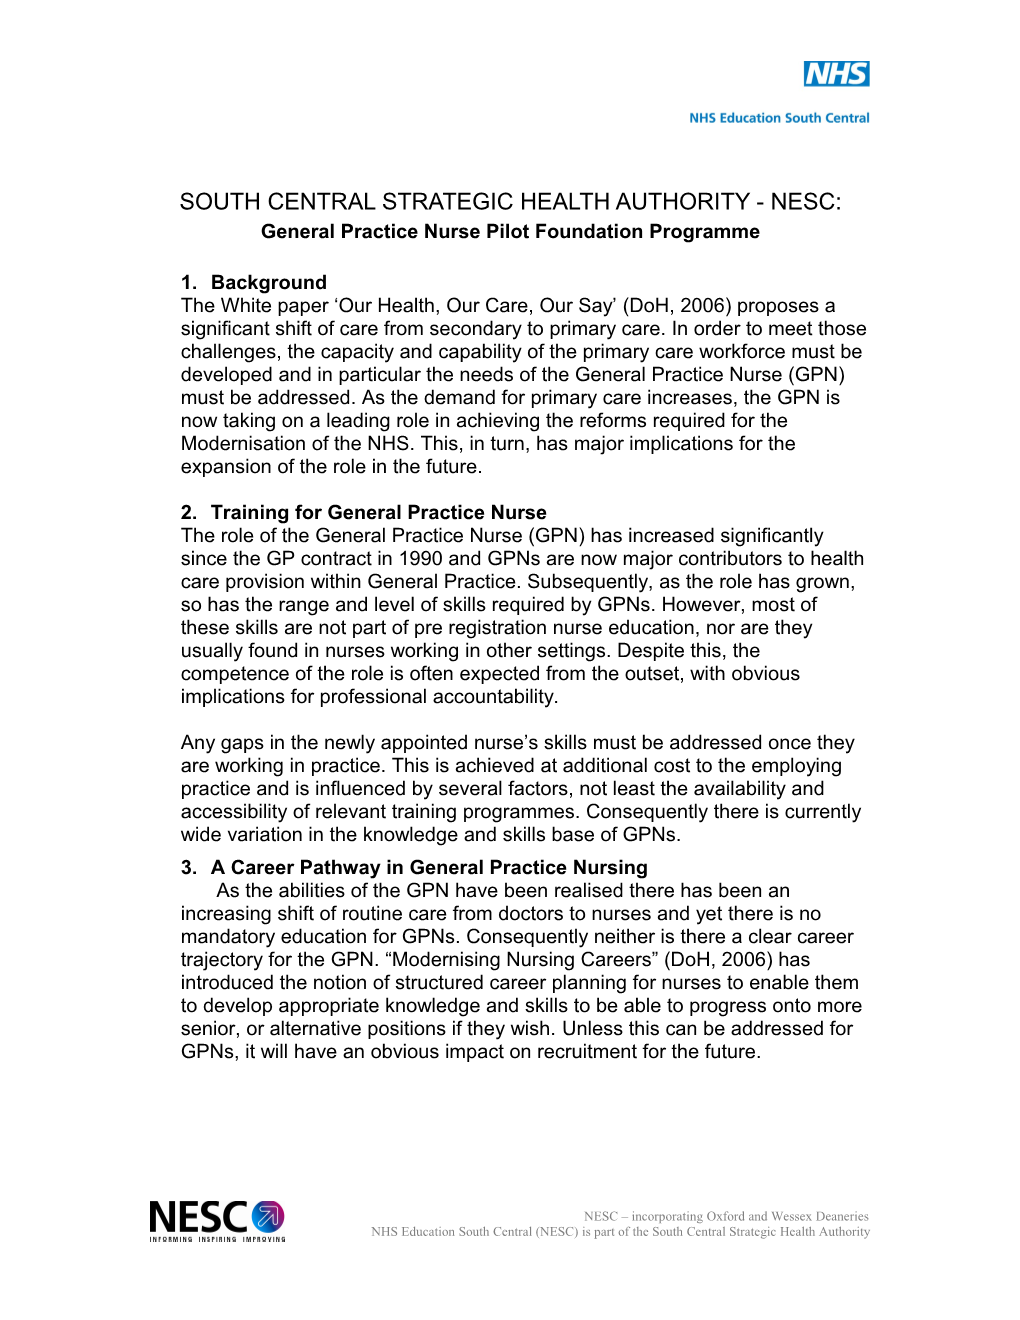 South Central Strategic Health Authority - Nesc